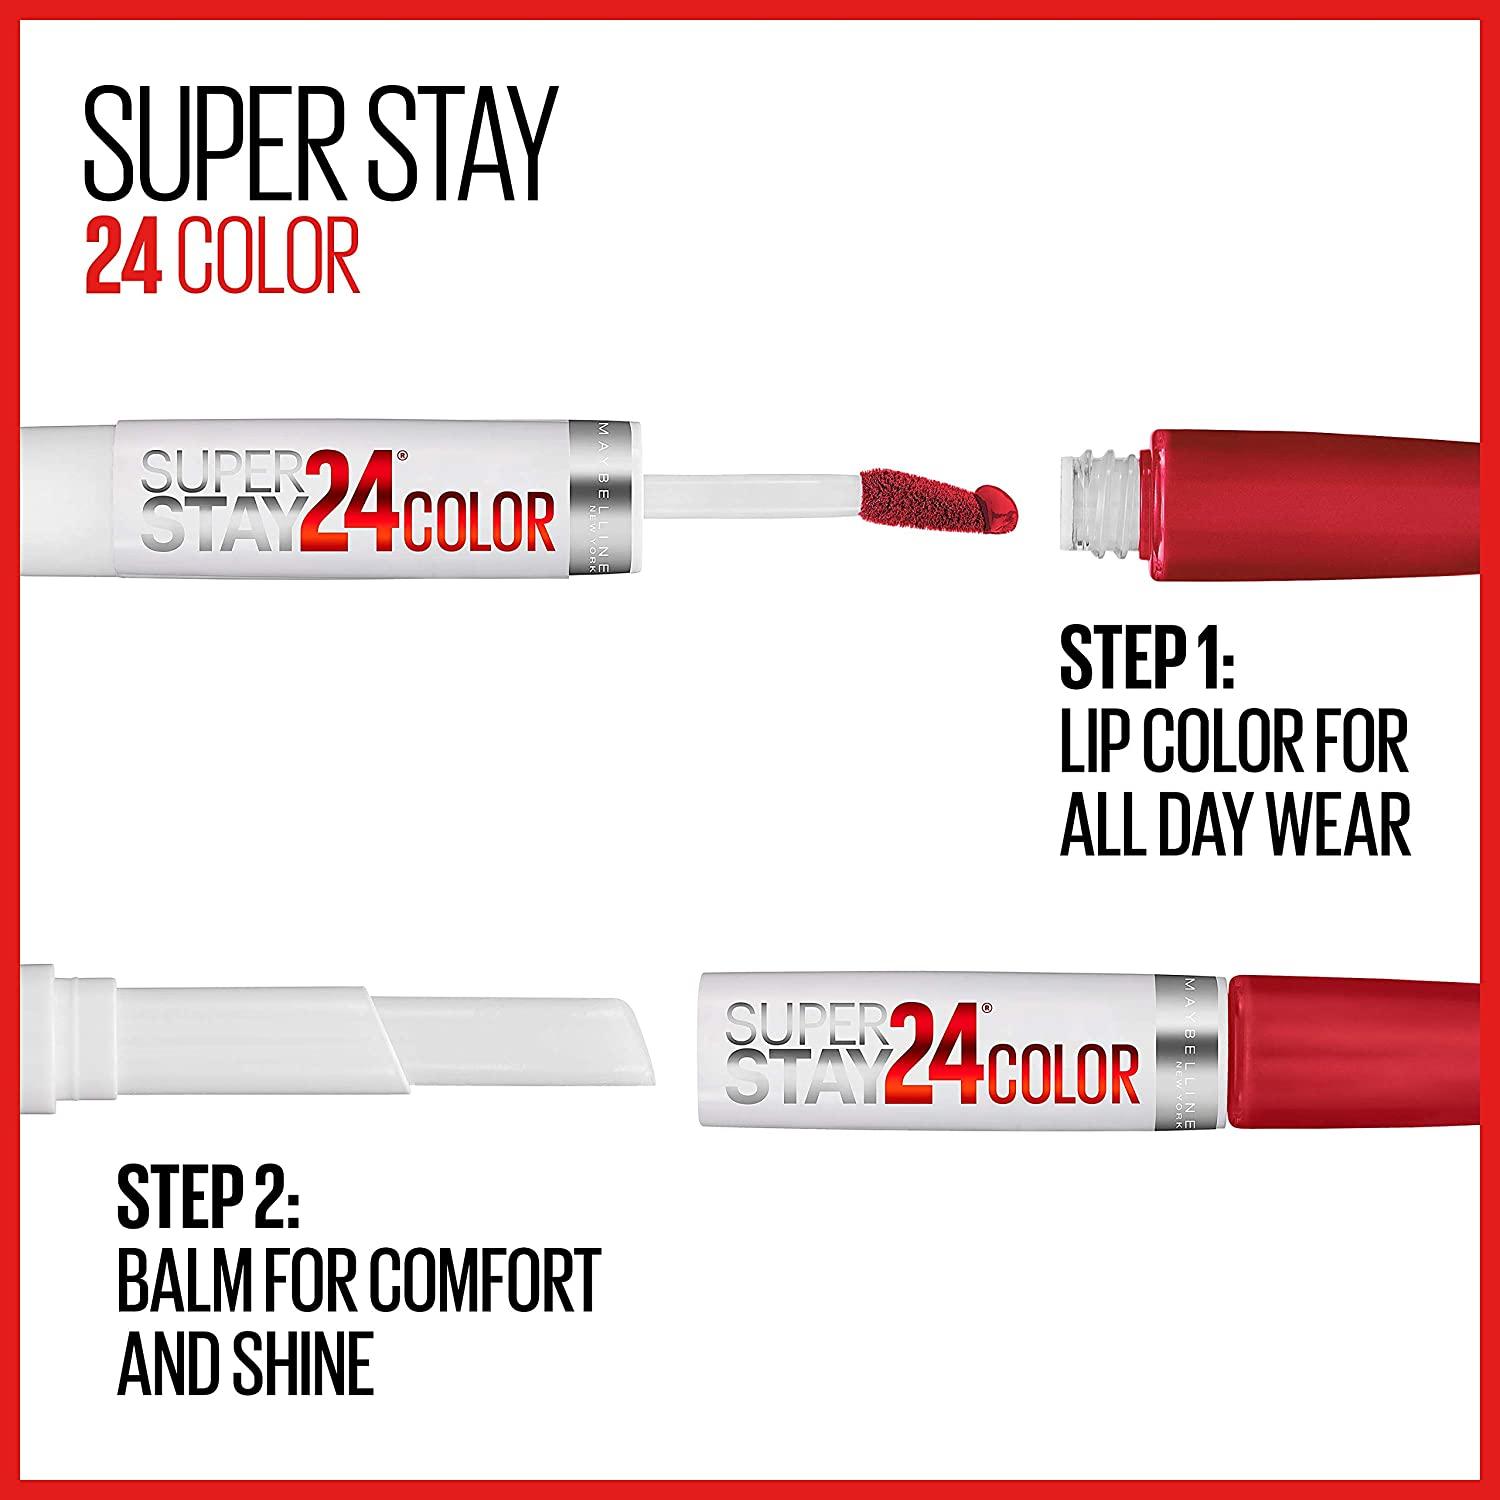 Maybelline SuperStay 24 2-Step Liquid Lipstick Makeup, Forever Chestnut